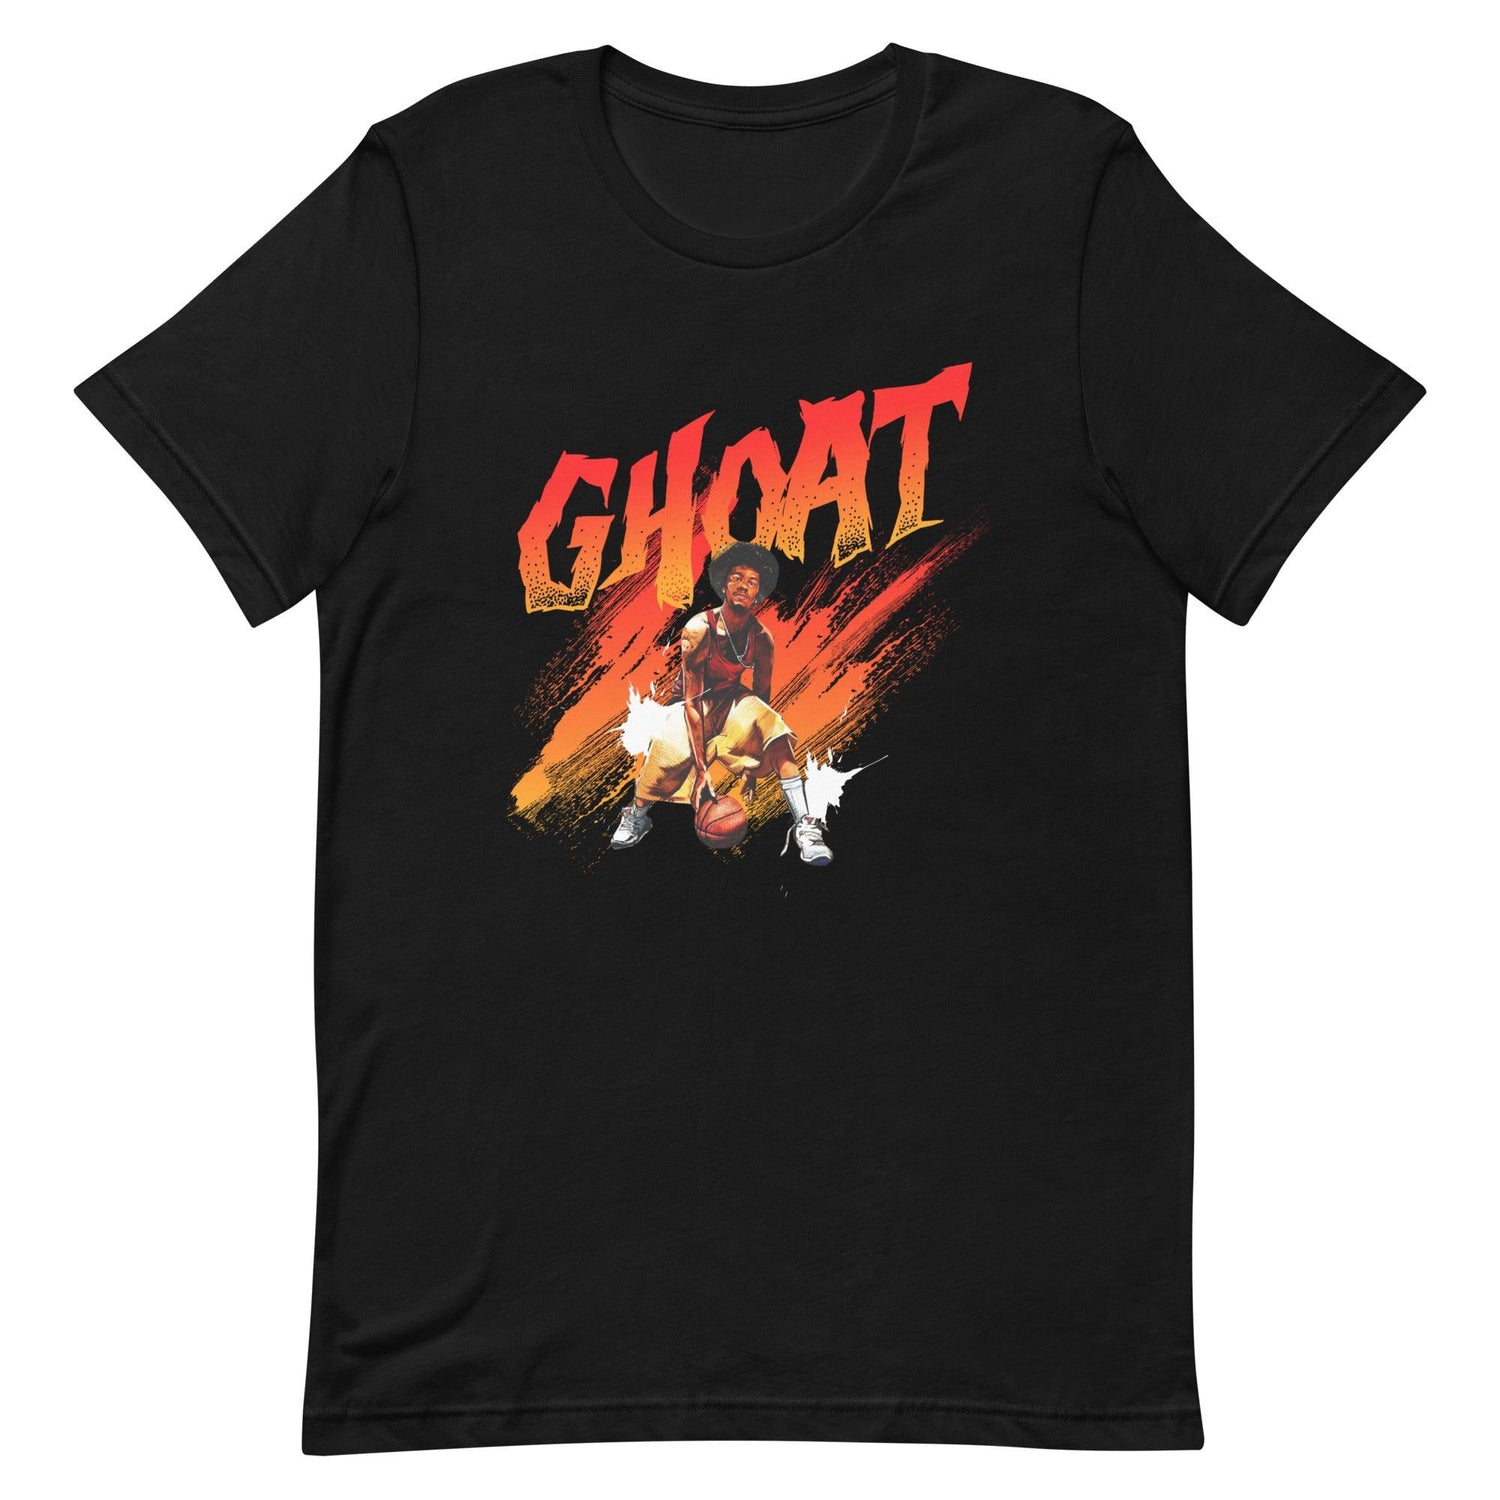 Hot Sauce "Ghoat" t-shirt - Fan Arch